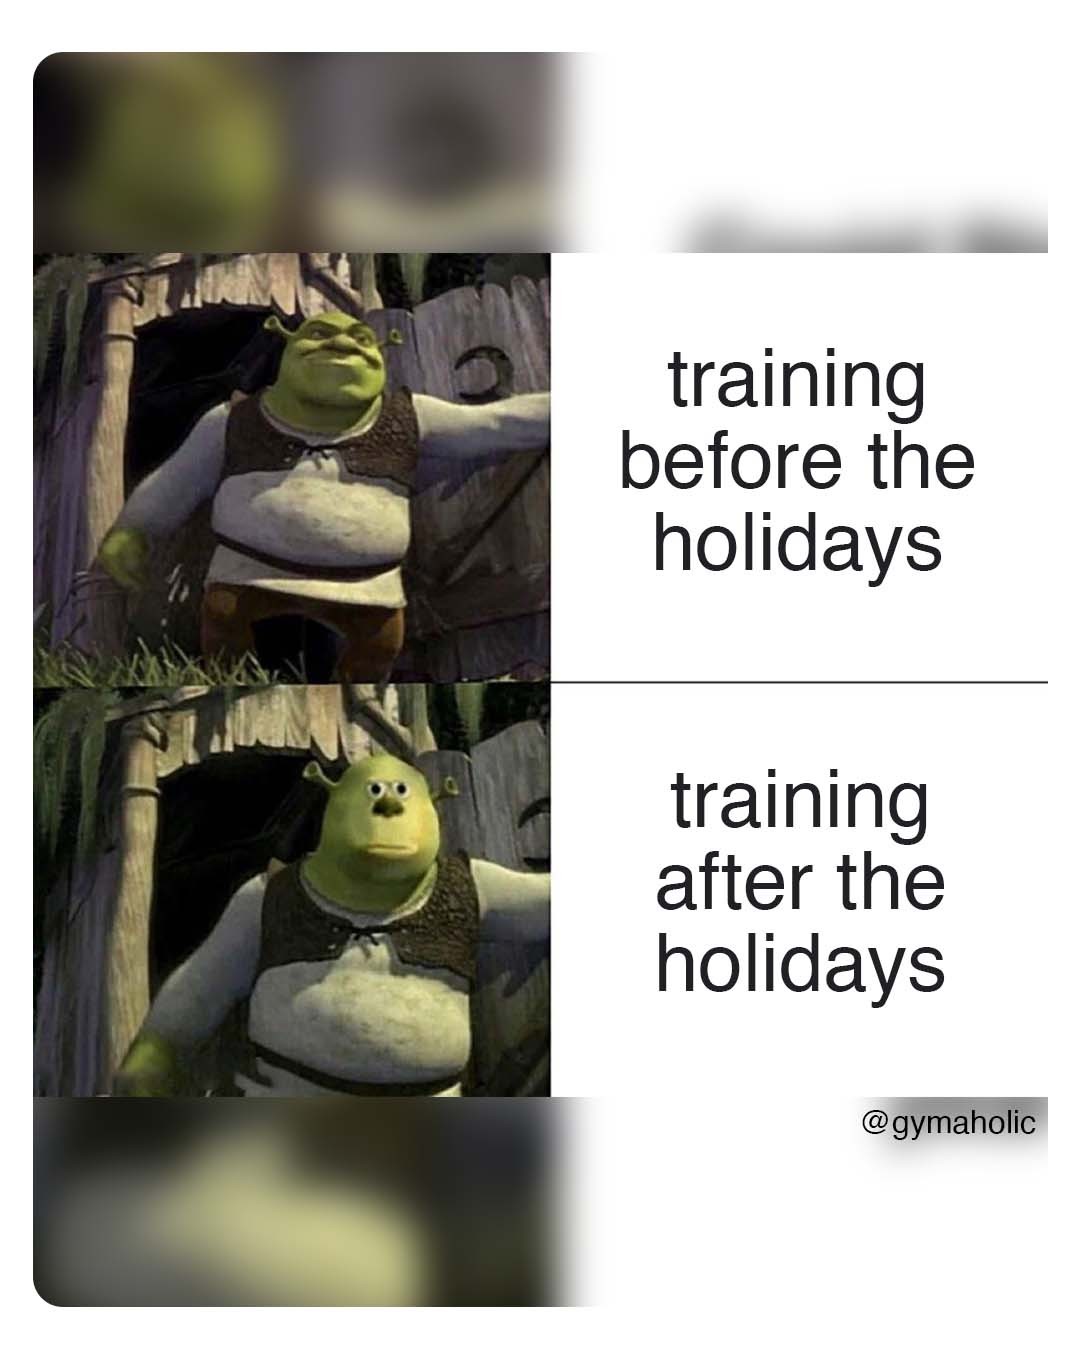 Training before the holidays